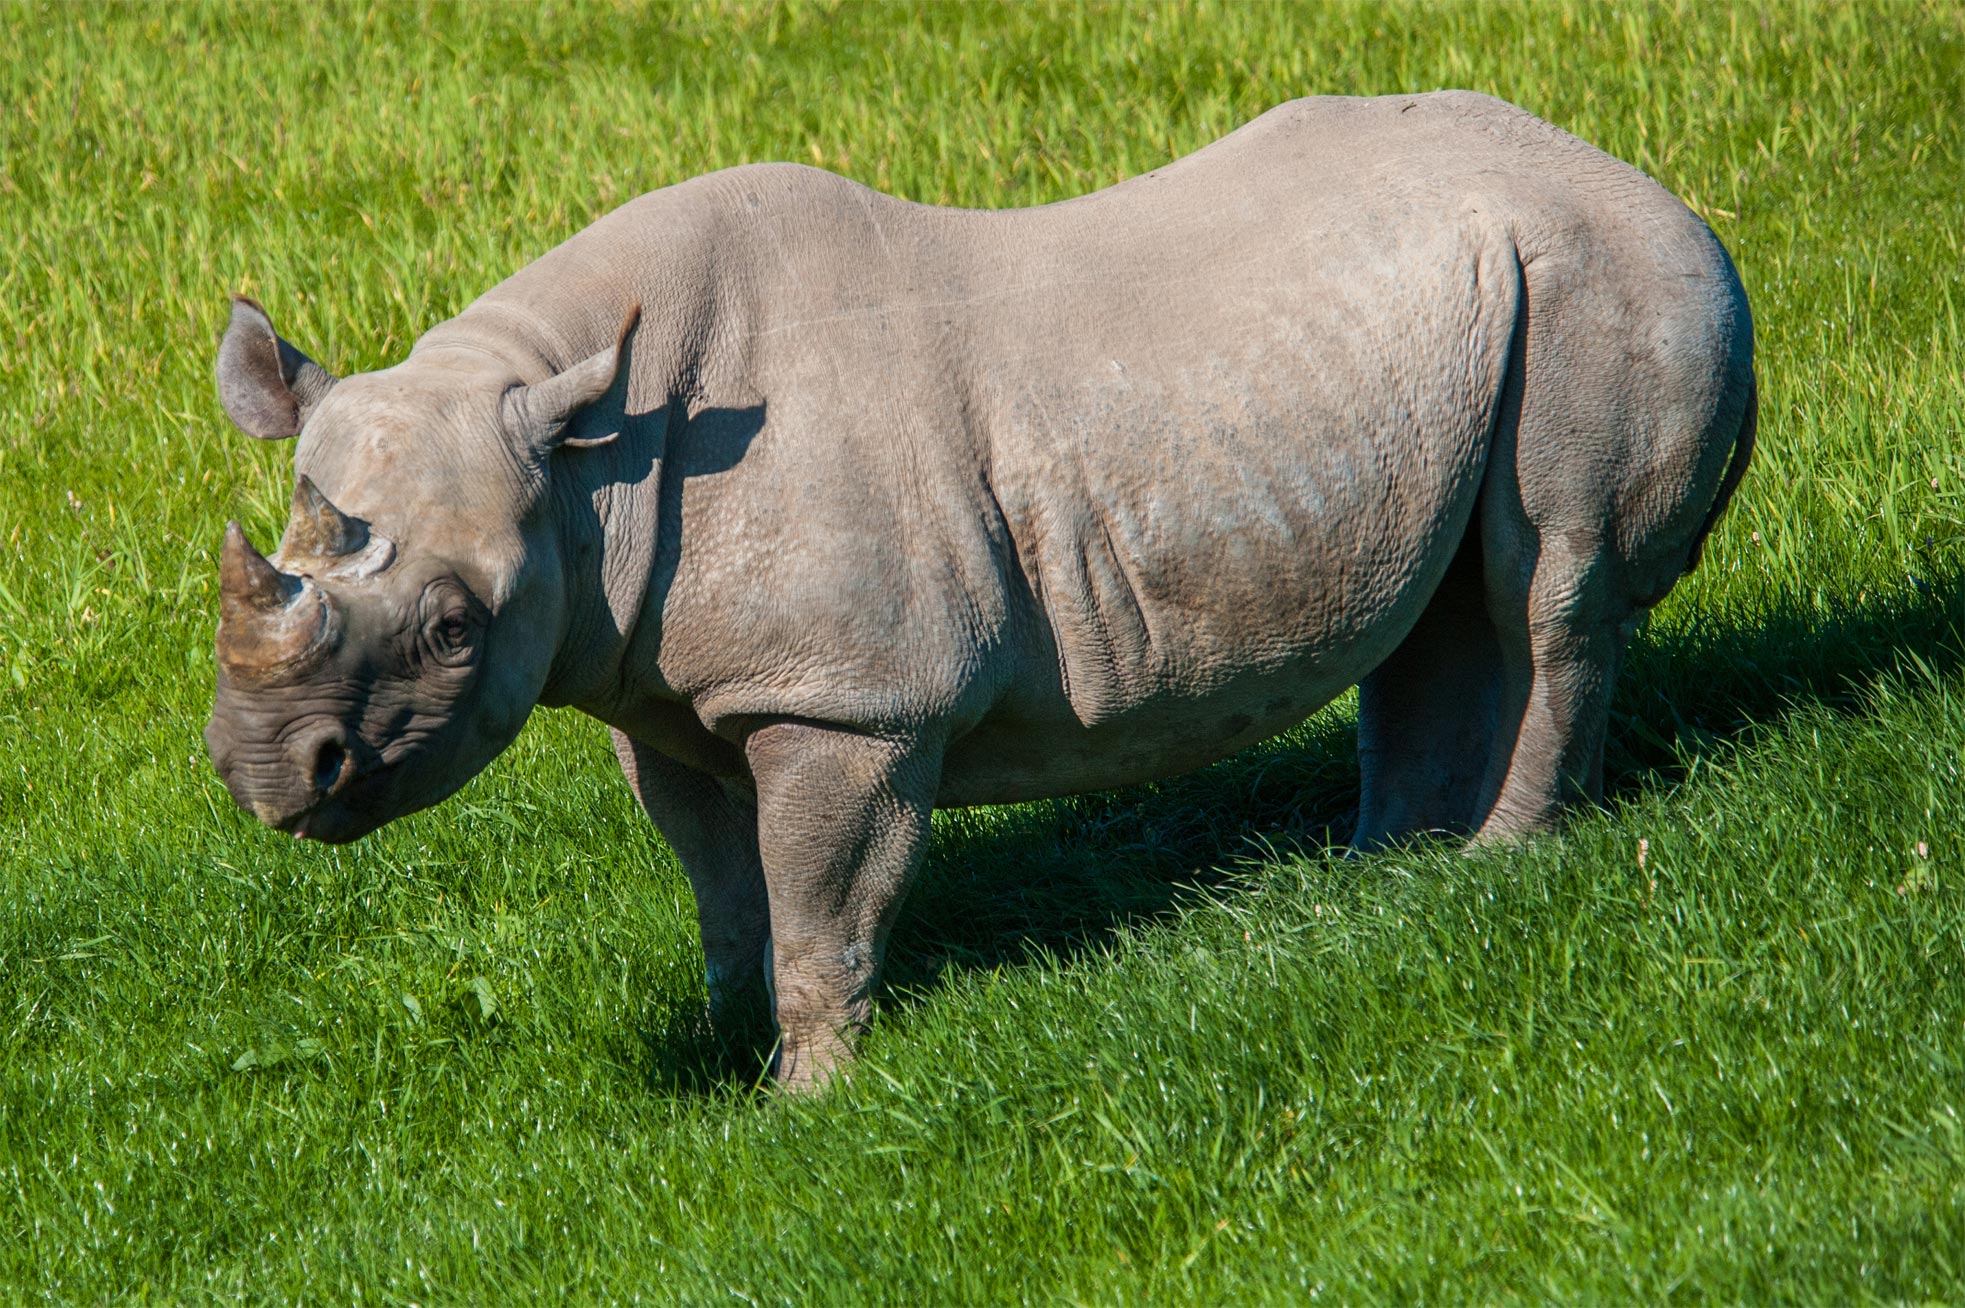 Rhino outside